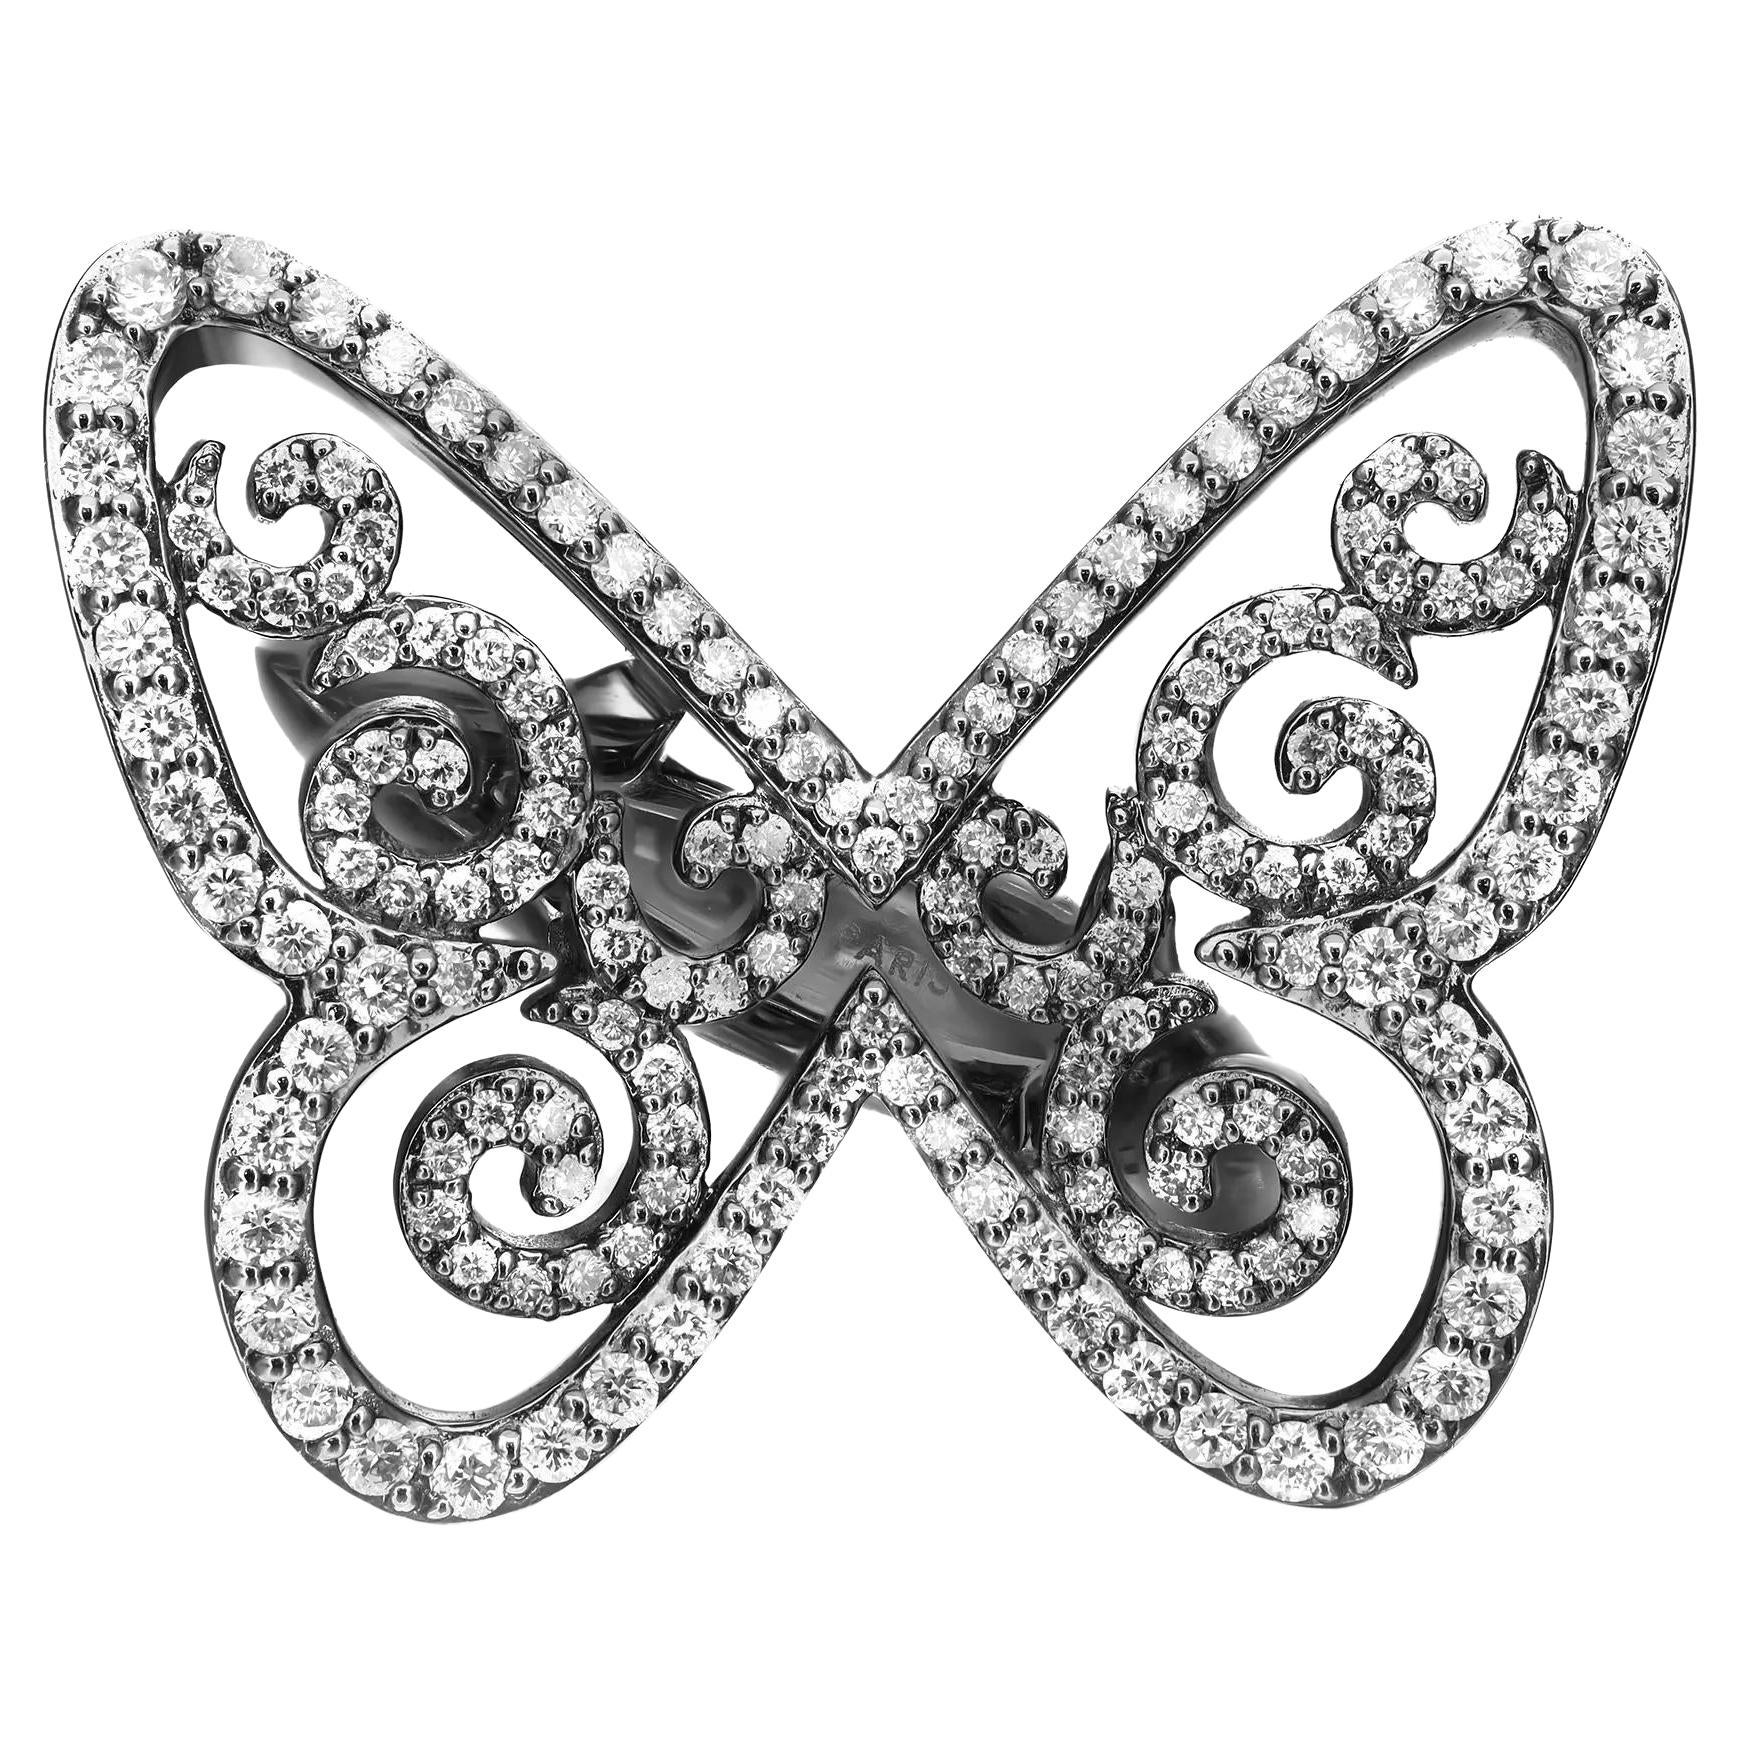 Messika Butterfly Arabesque Diamond Ring 18K Blackened White Gold Size 51 US 5.5